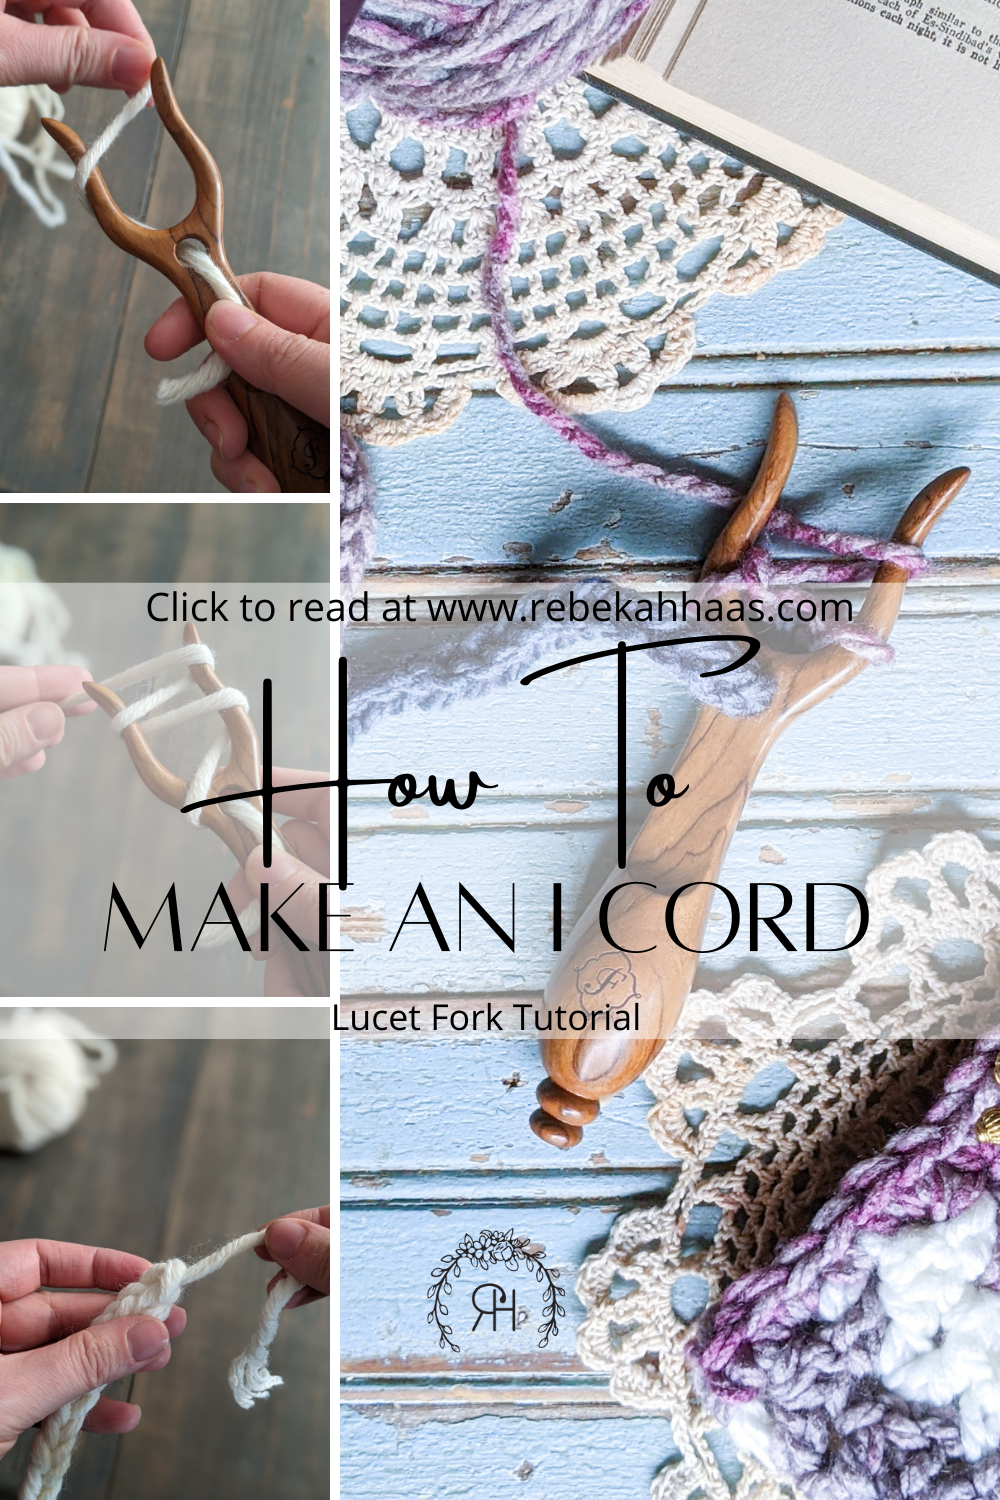 Lucet, Knitting fork, Weaving fork, Cord making, Wooden lucet fork